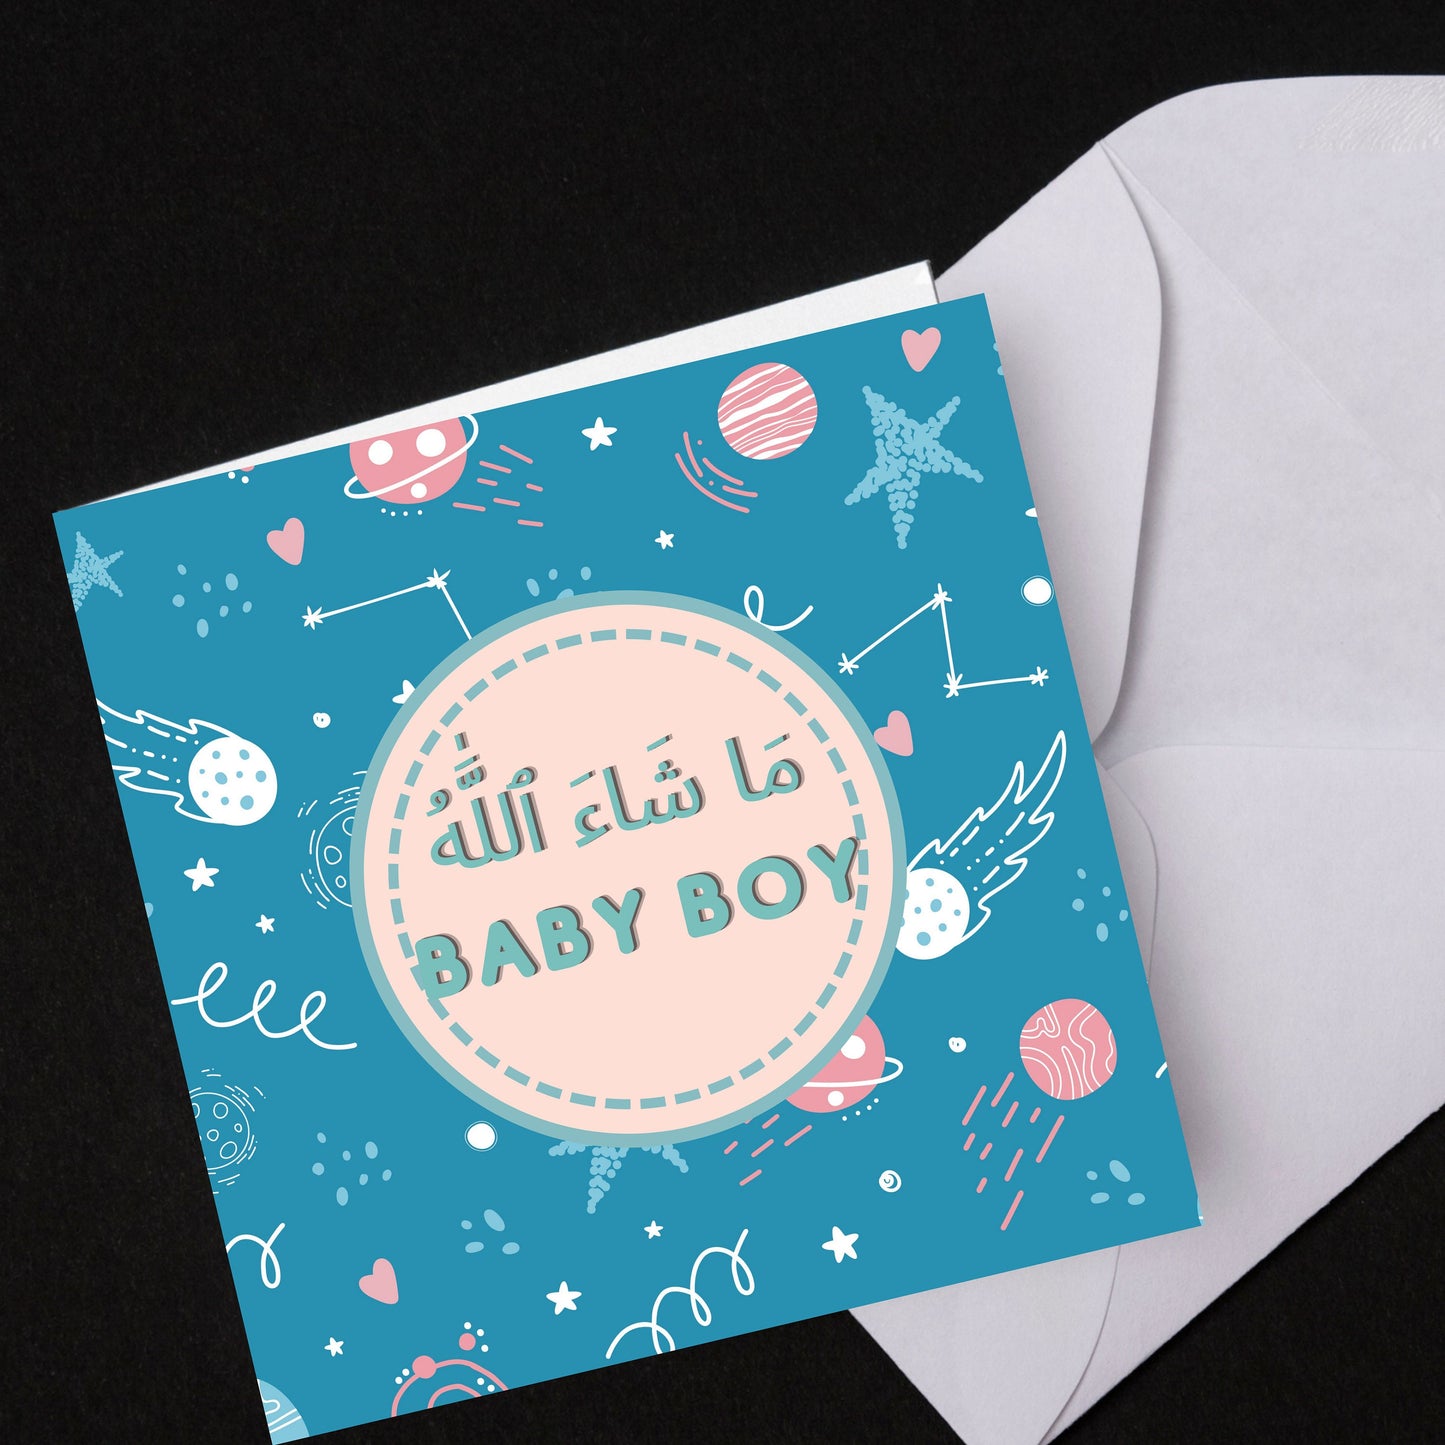 Islamic Greeting card, MashaAllah baby Boy greeting card, Arabic aBby Boy card